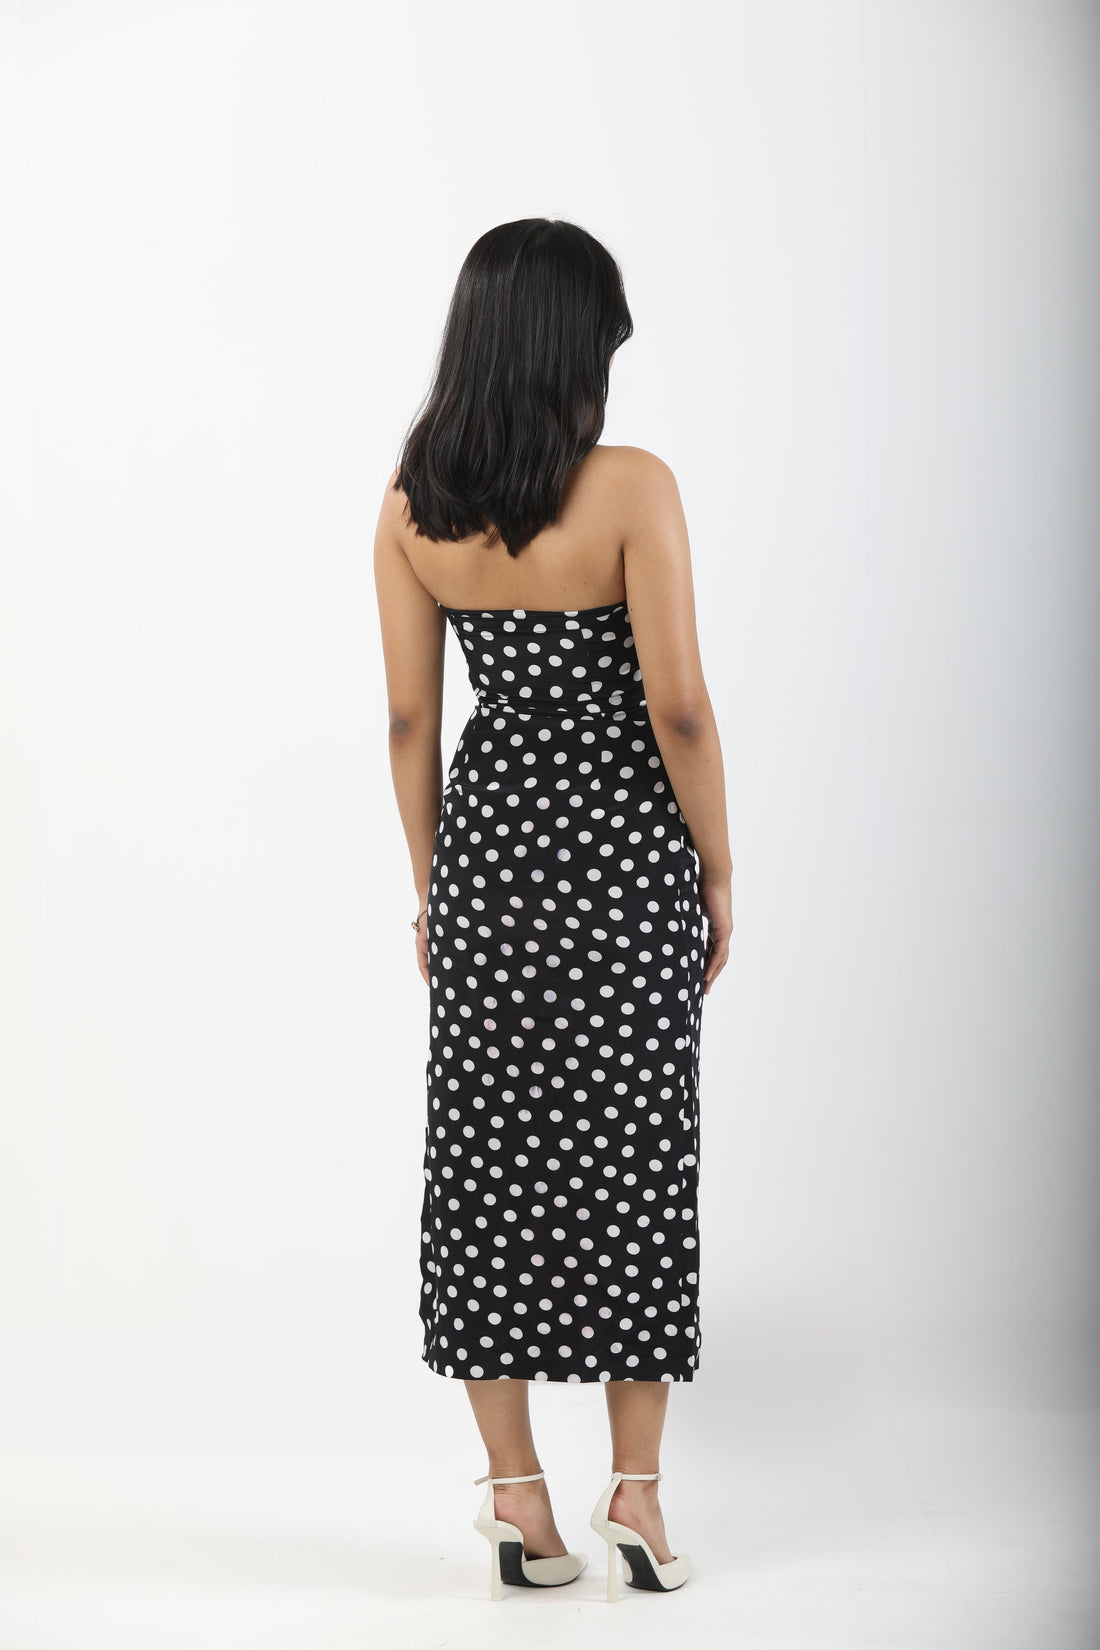 Convertible Cinching Tube Dress - Noir Dot